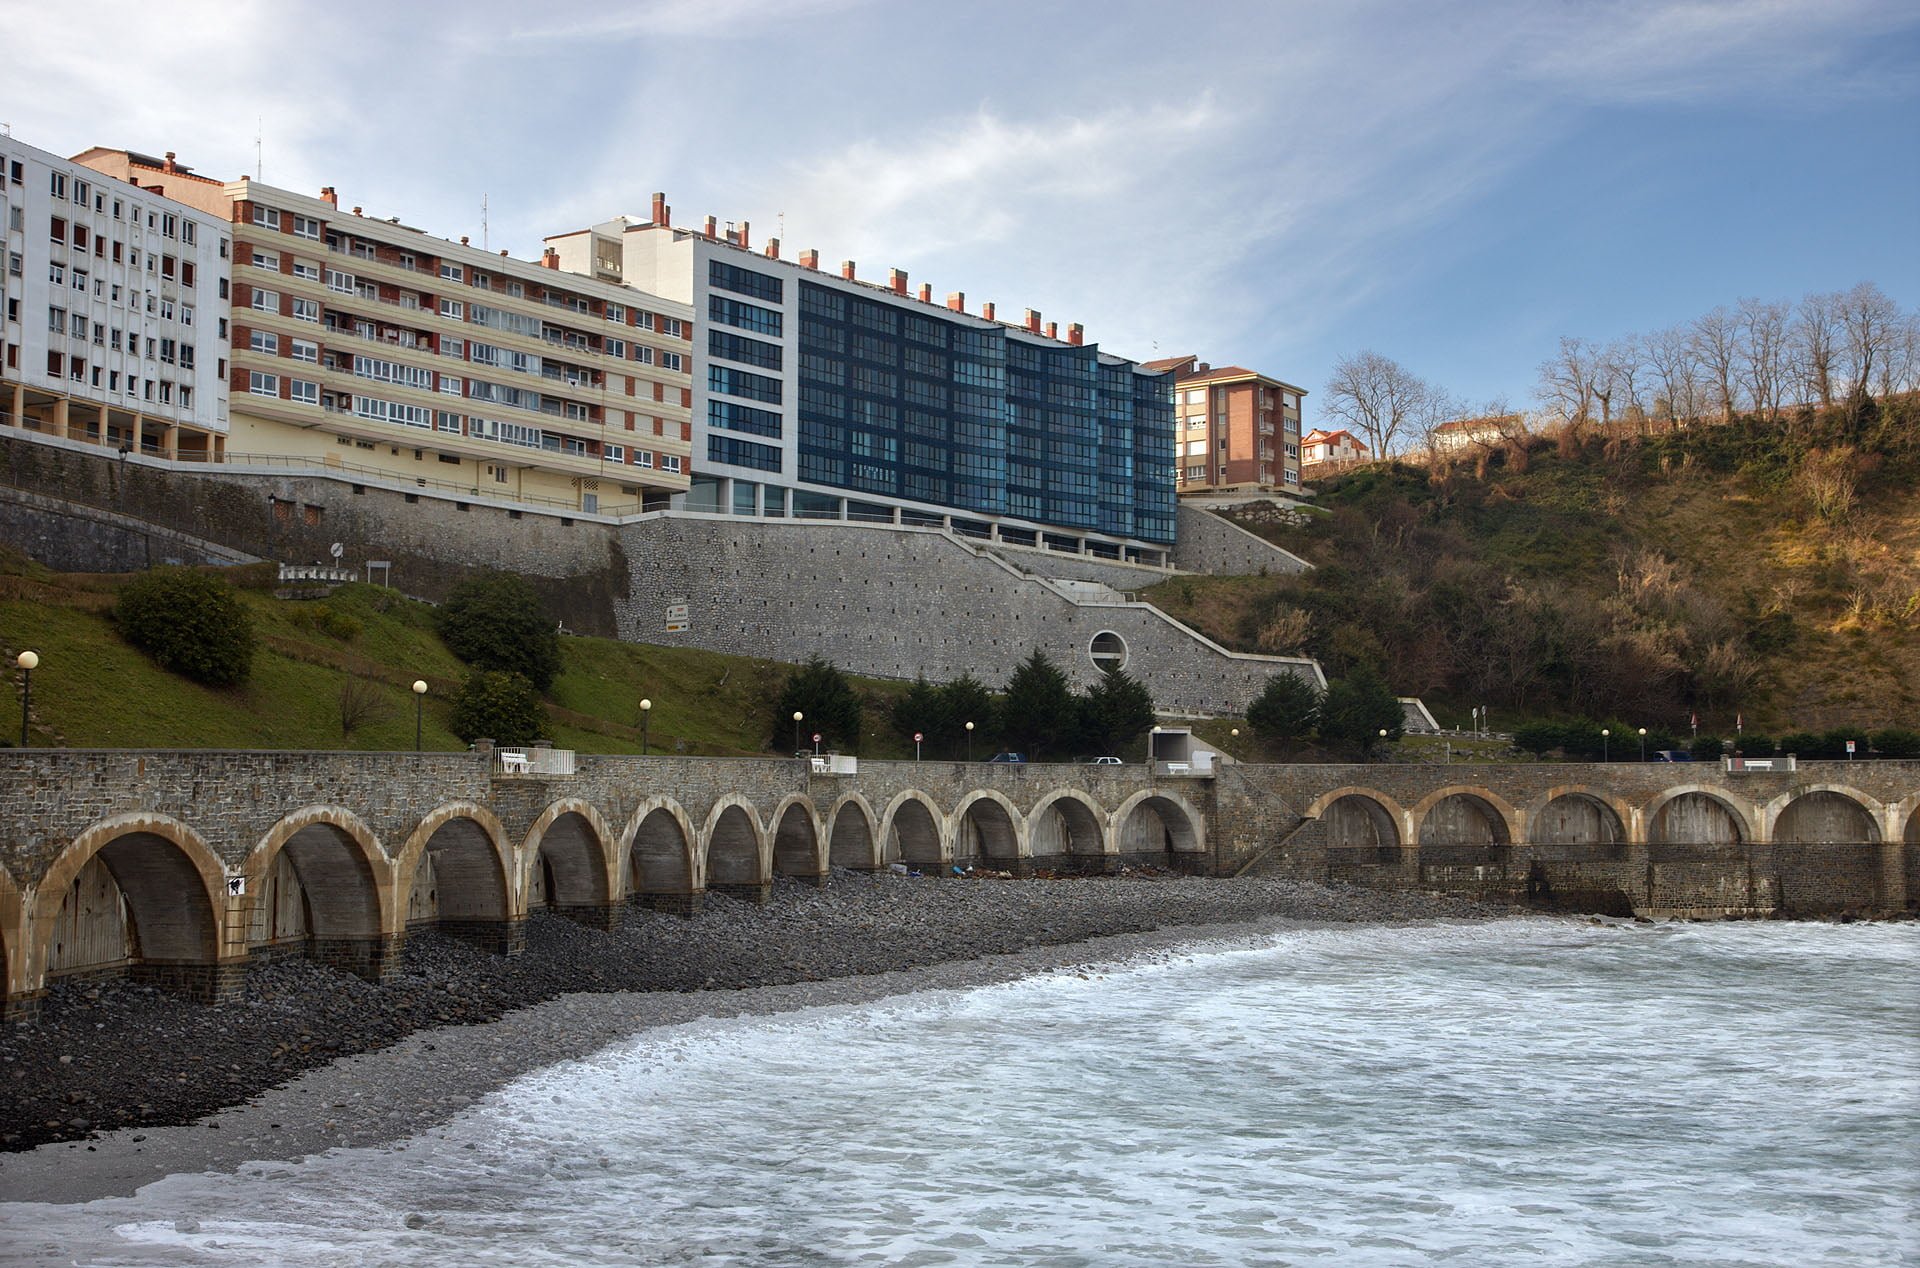 Gaztetape 1 - Luxury expat apartment in Bilbao